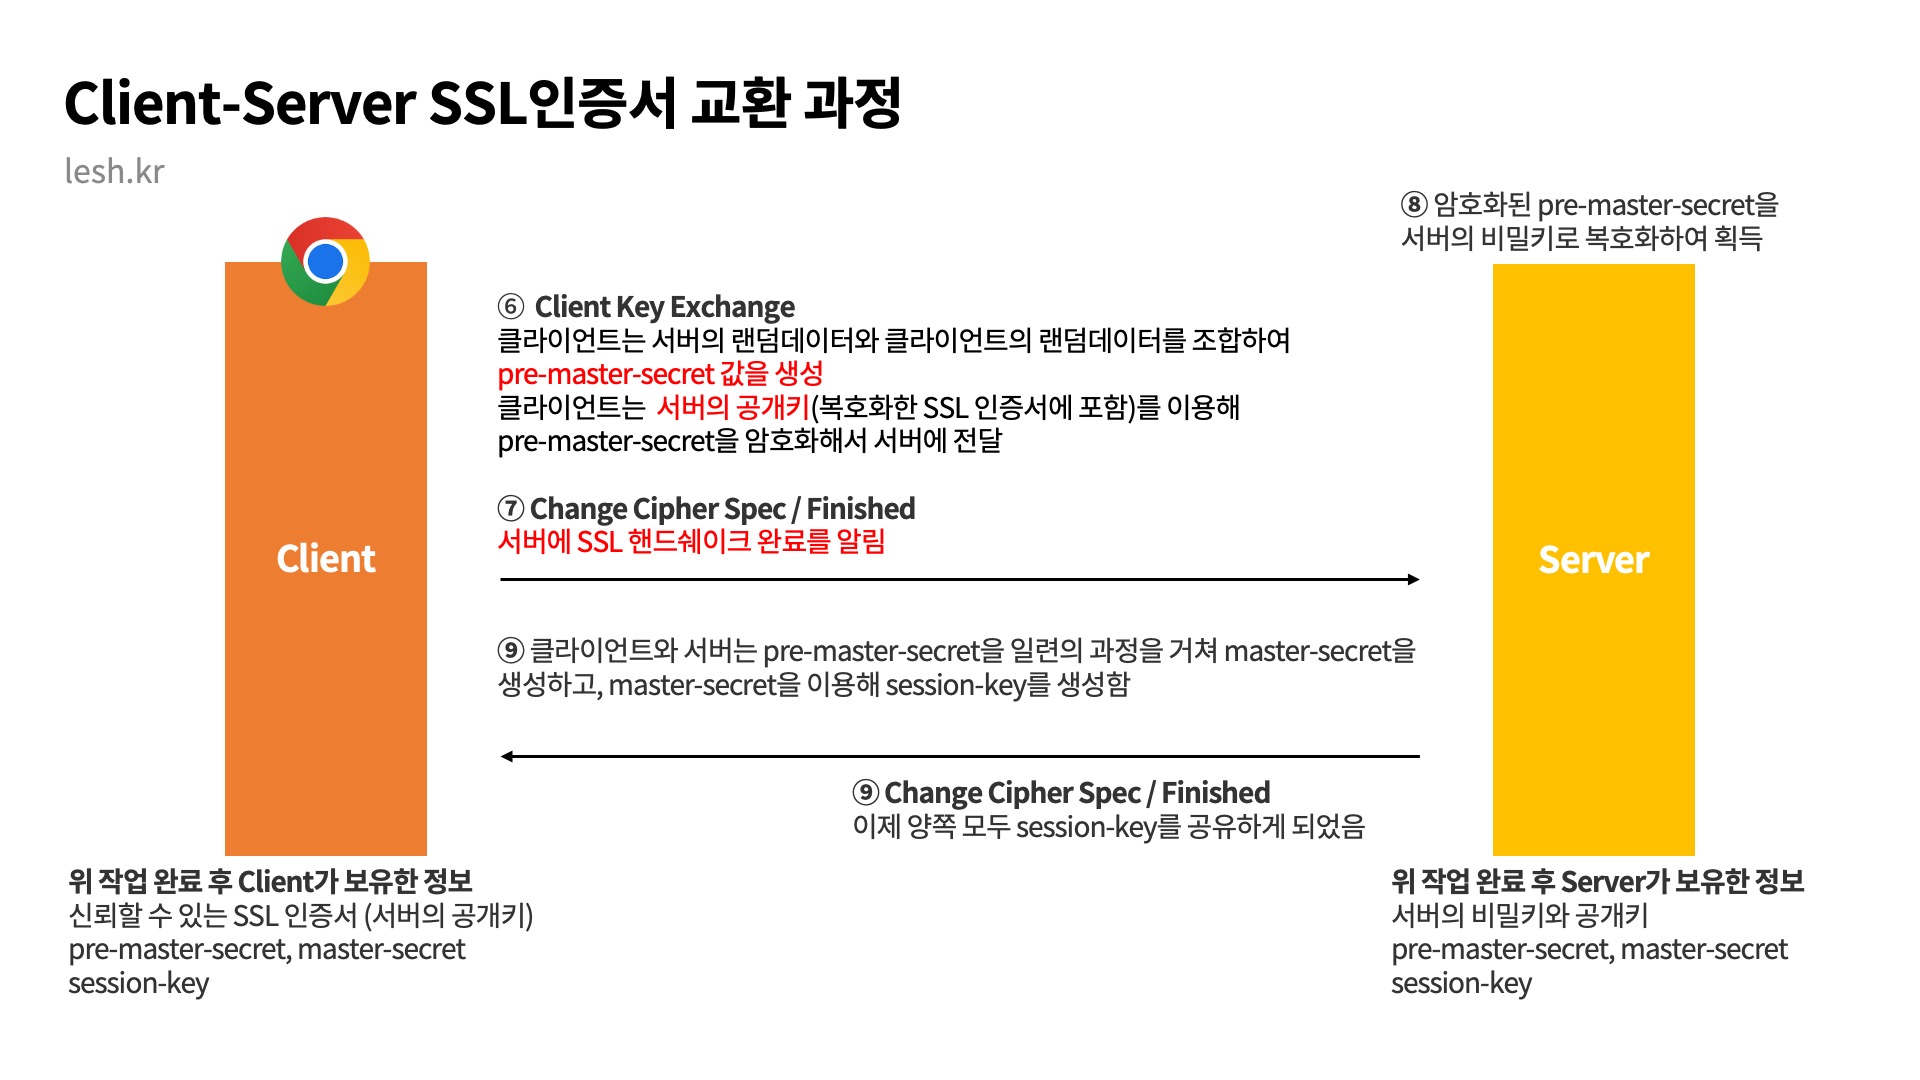 Client-Server SSL인증서 교환 과정